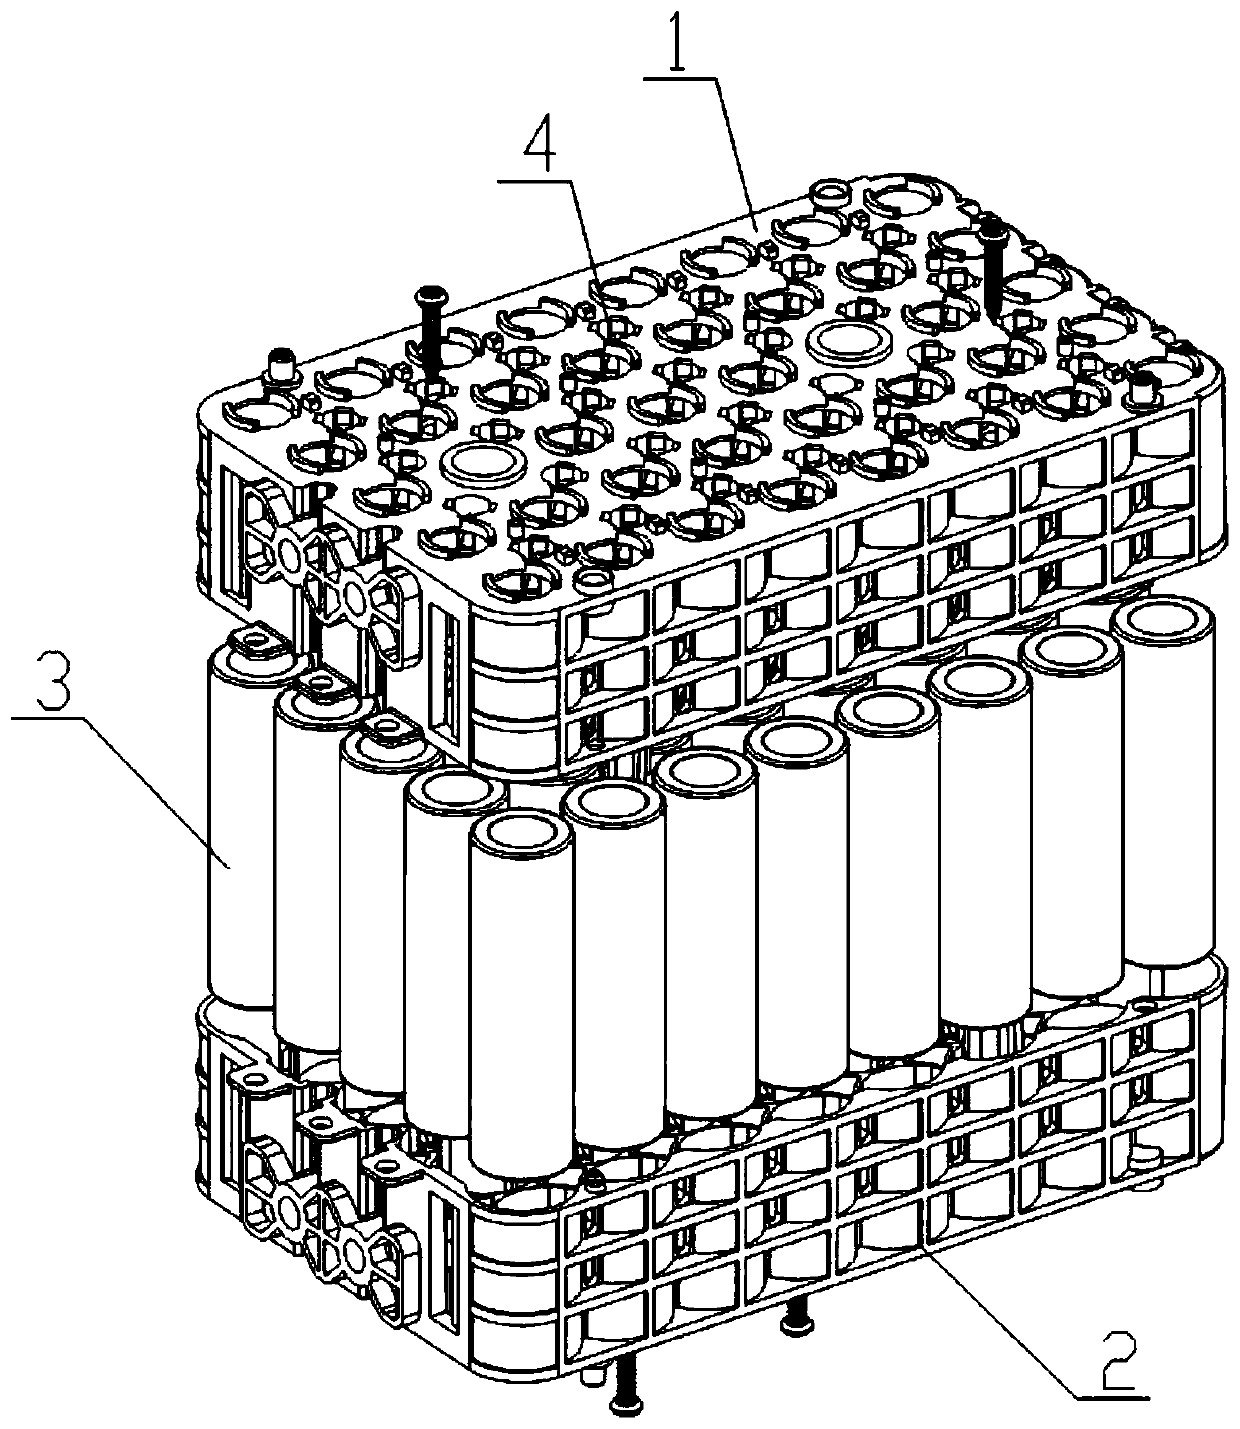 A battery module glue filling tank device